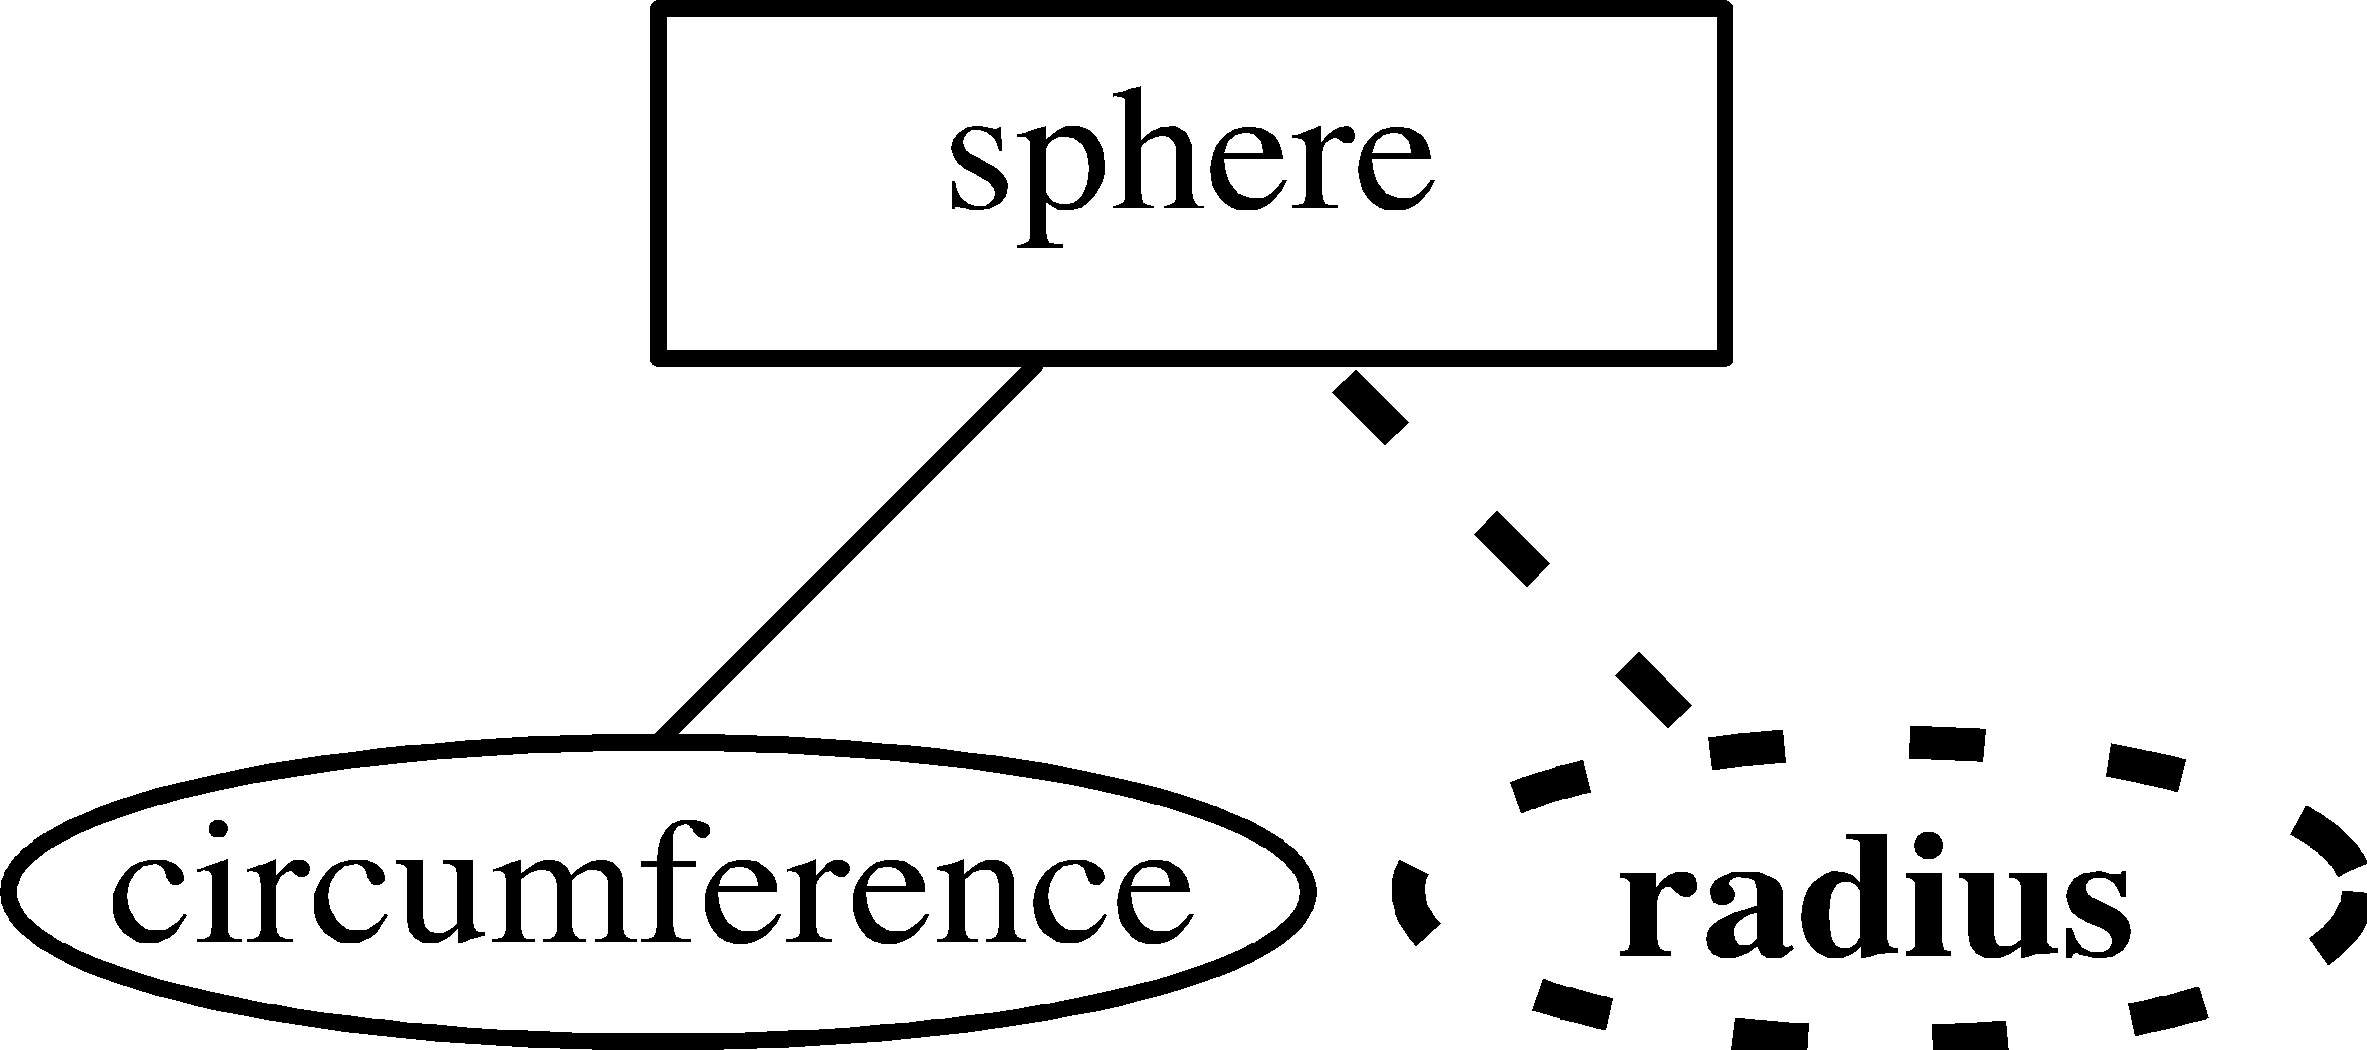 Entity-Relationship Model within Er Diagram Dashed Line